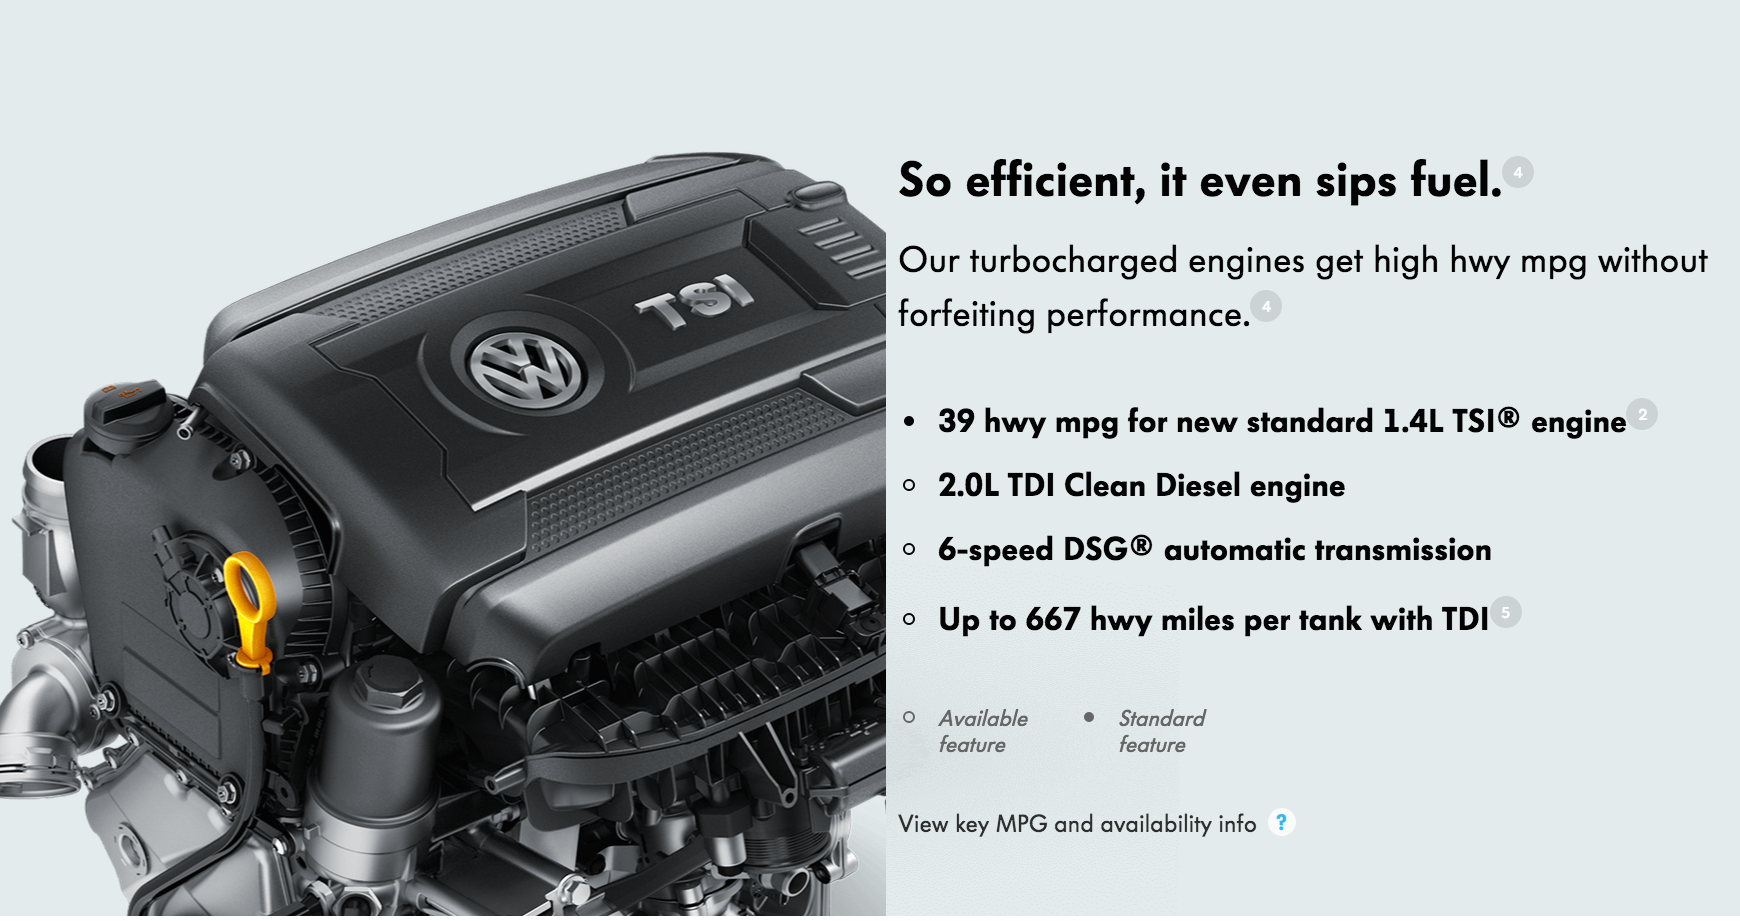 Feds Sue Volkswagen For Deceptive “Clean Diesel” Advertising